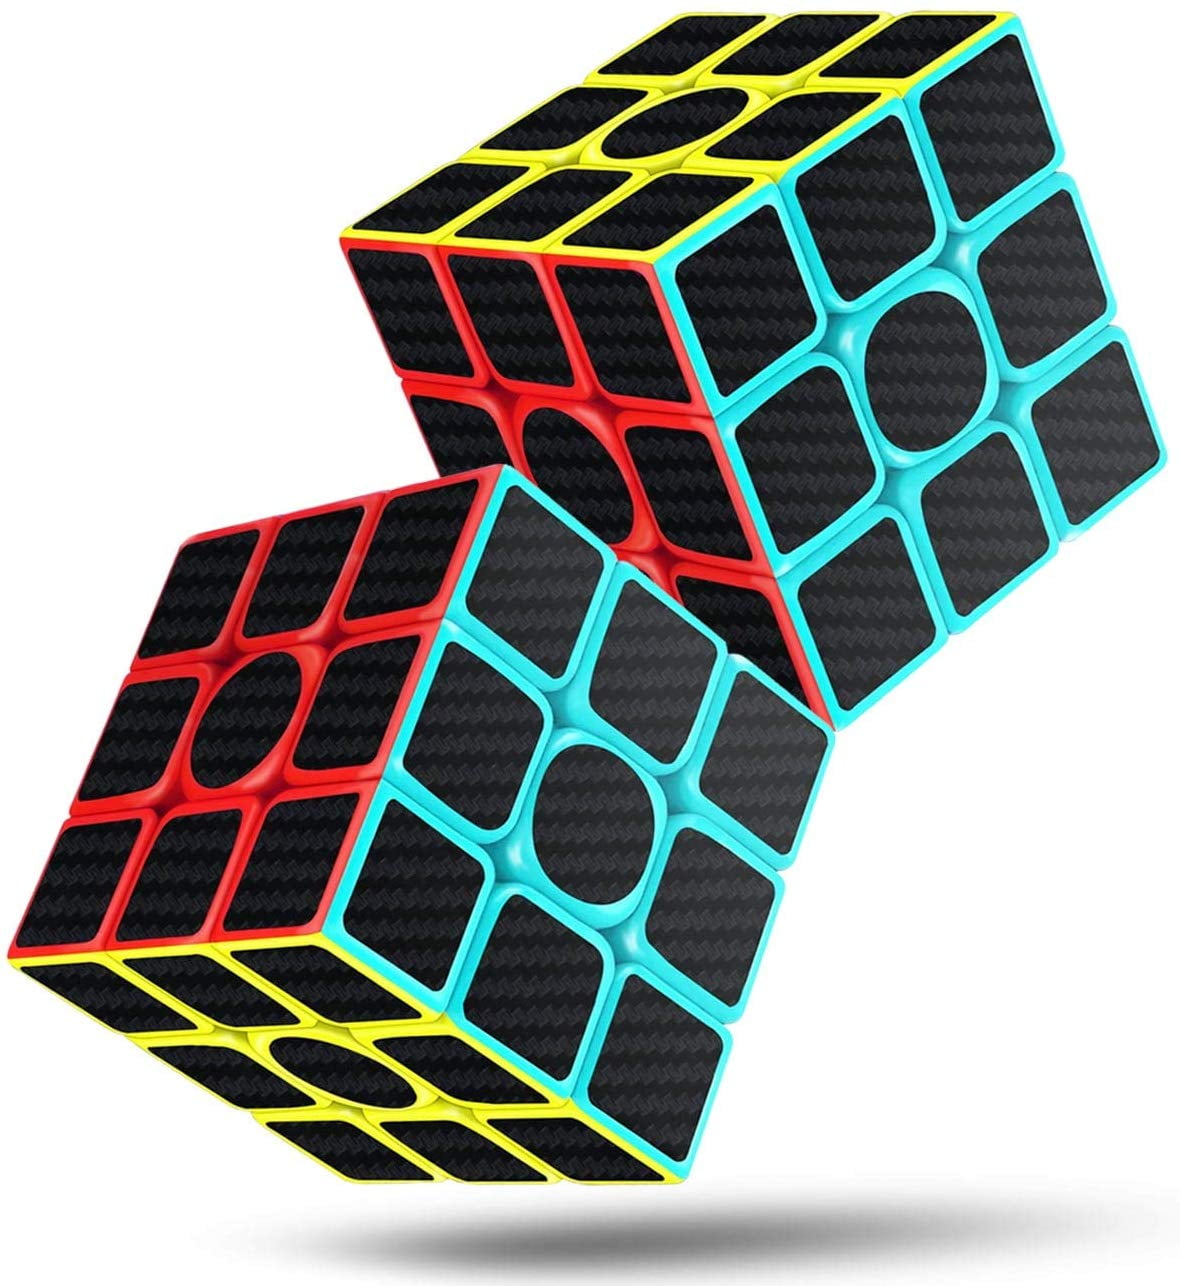 Rubiks Cube 3x3x3 Smooth Magic Stickerless Speed UK Stock Rubix Moyu